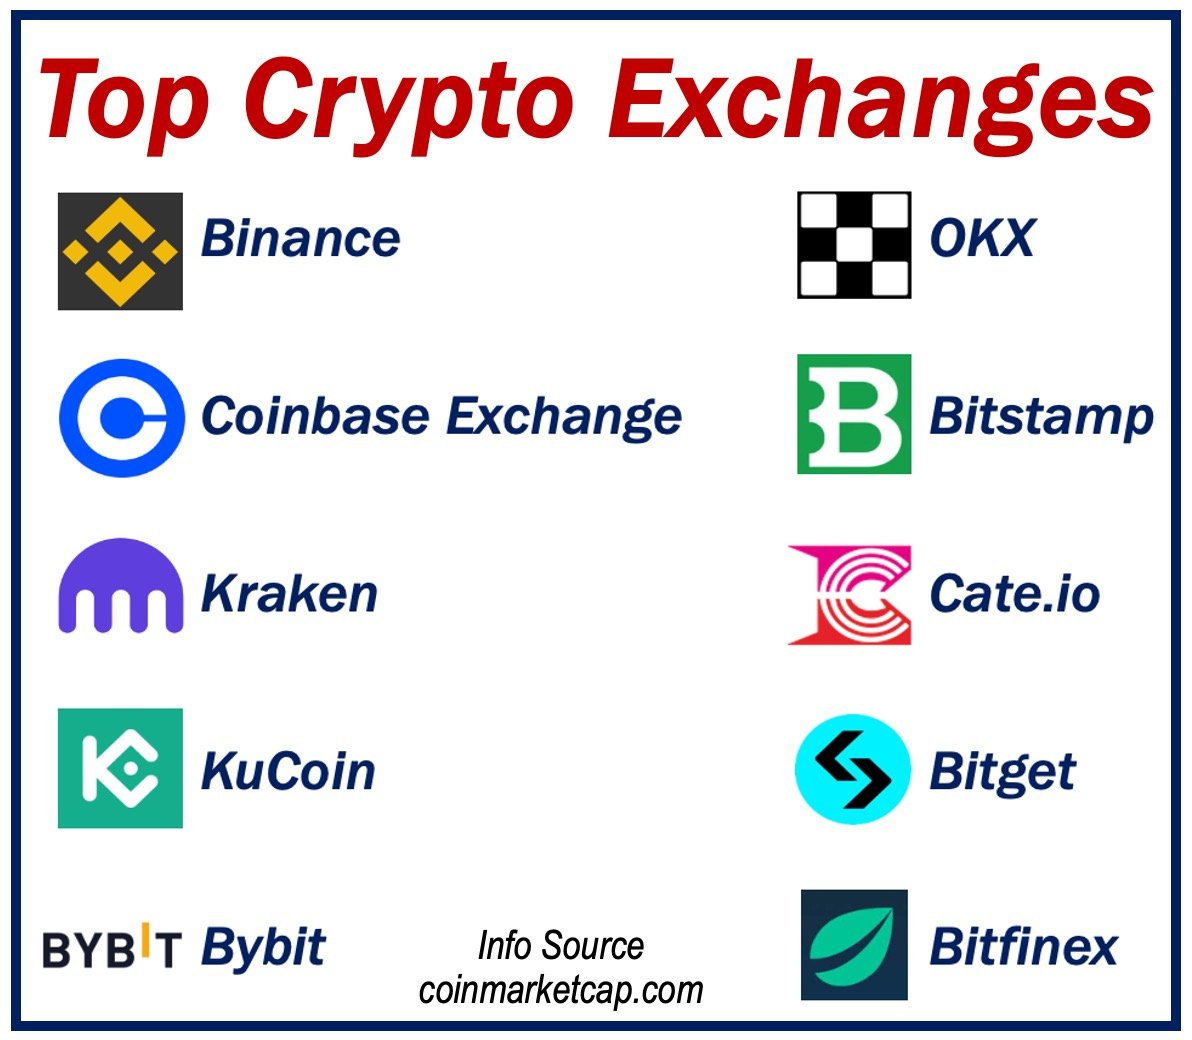 Cryptocurrency exchange - Wikipedia